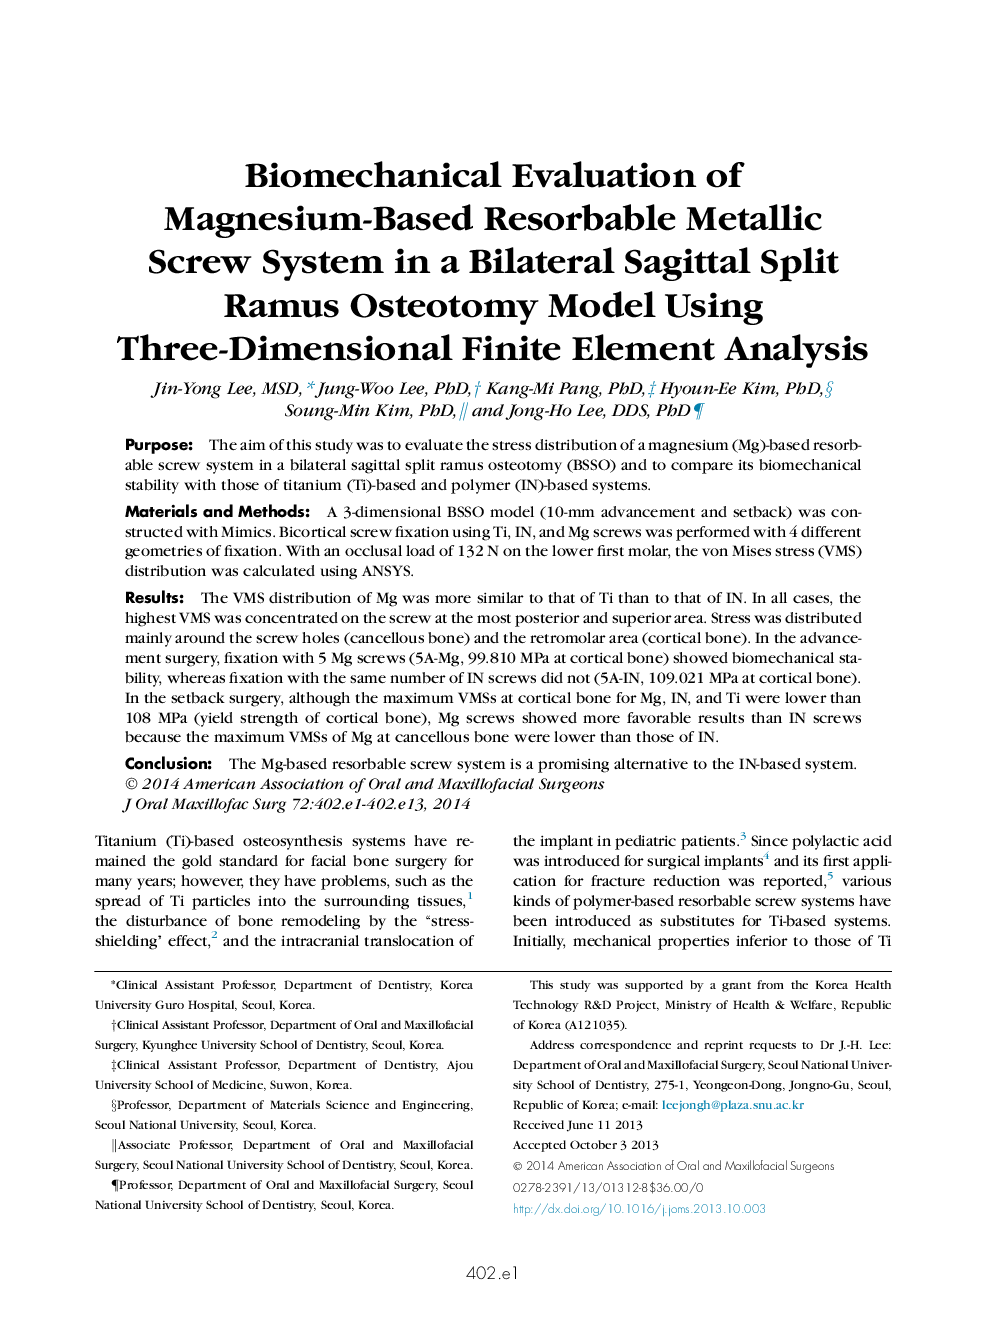 Biomechanical Evaluation of Magnesium-Based Resorbable Metallic Screw System in a Bilateral Sagittal Split Ramus Osteotomy Model Using Three-Dimensional Finite Element Analysis